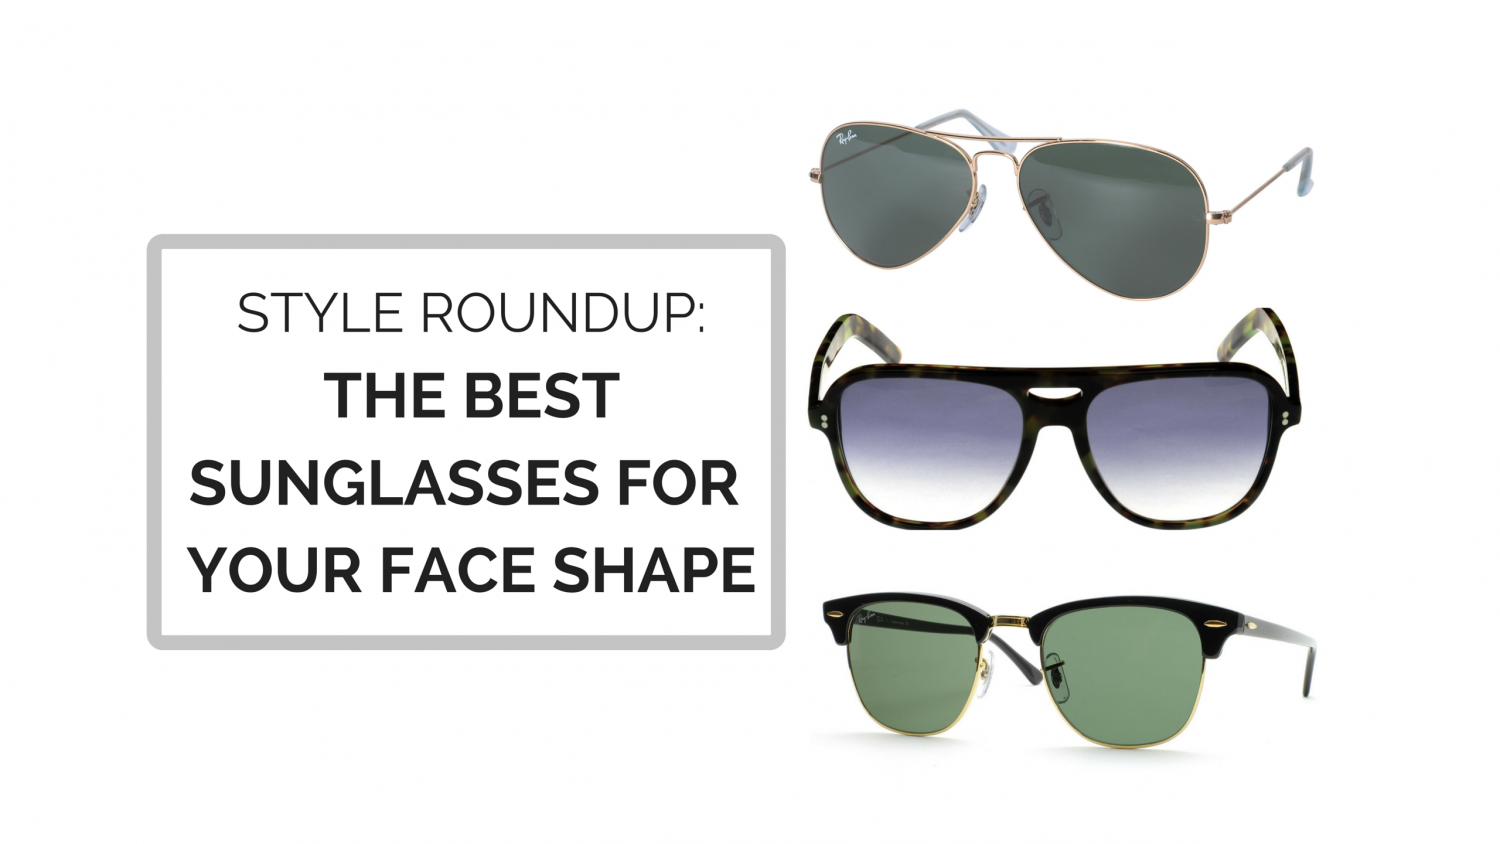 sunglasses, summer style, men's style, sunglasses for face shape, celeb style